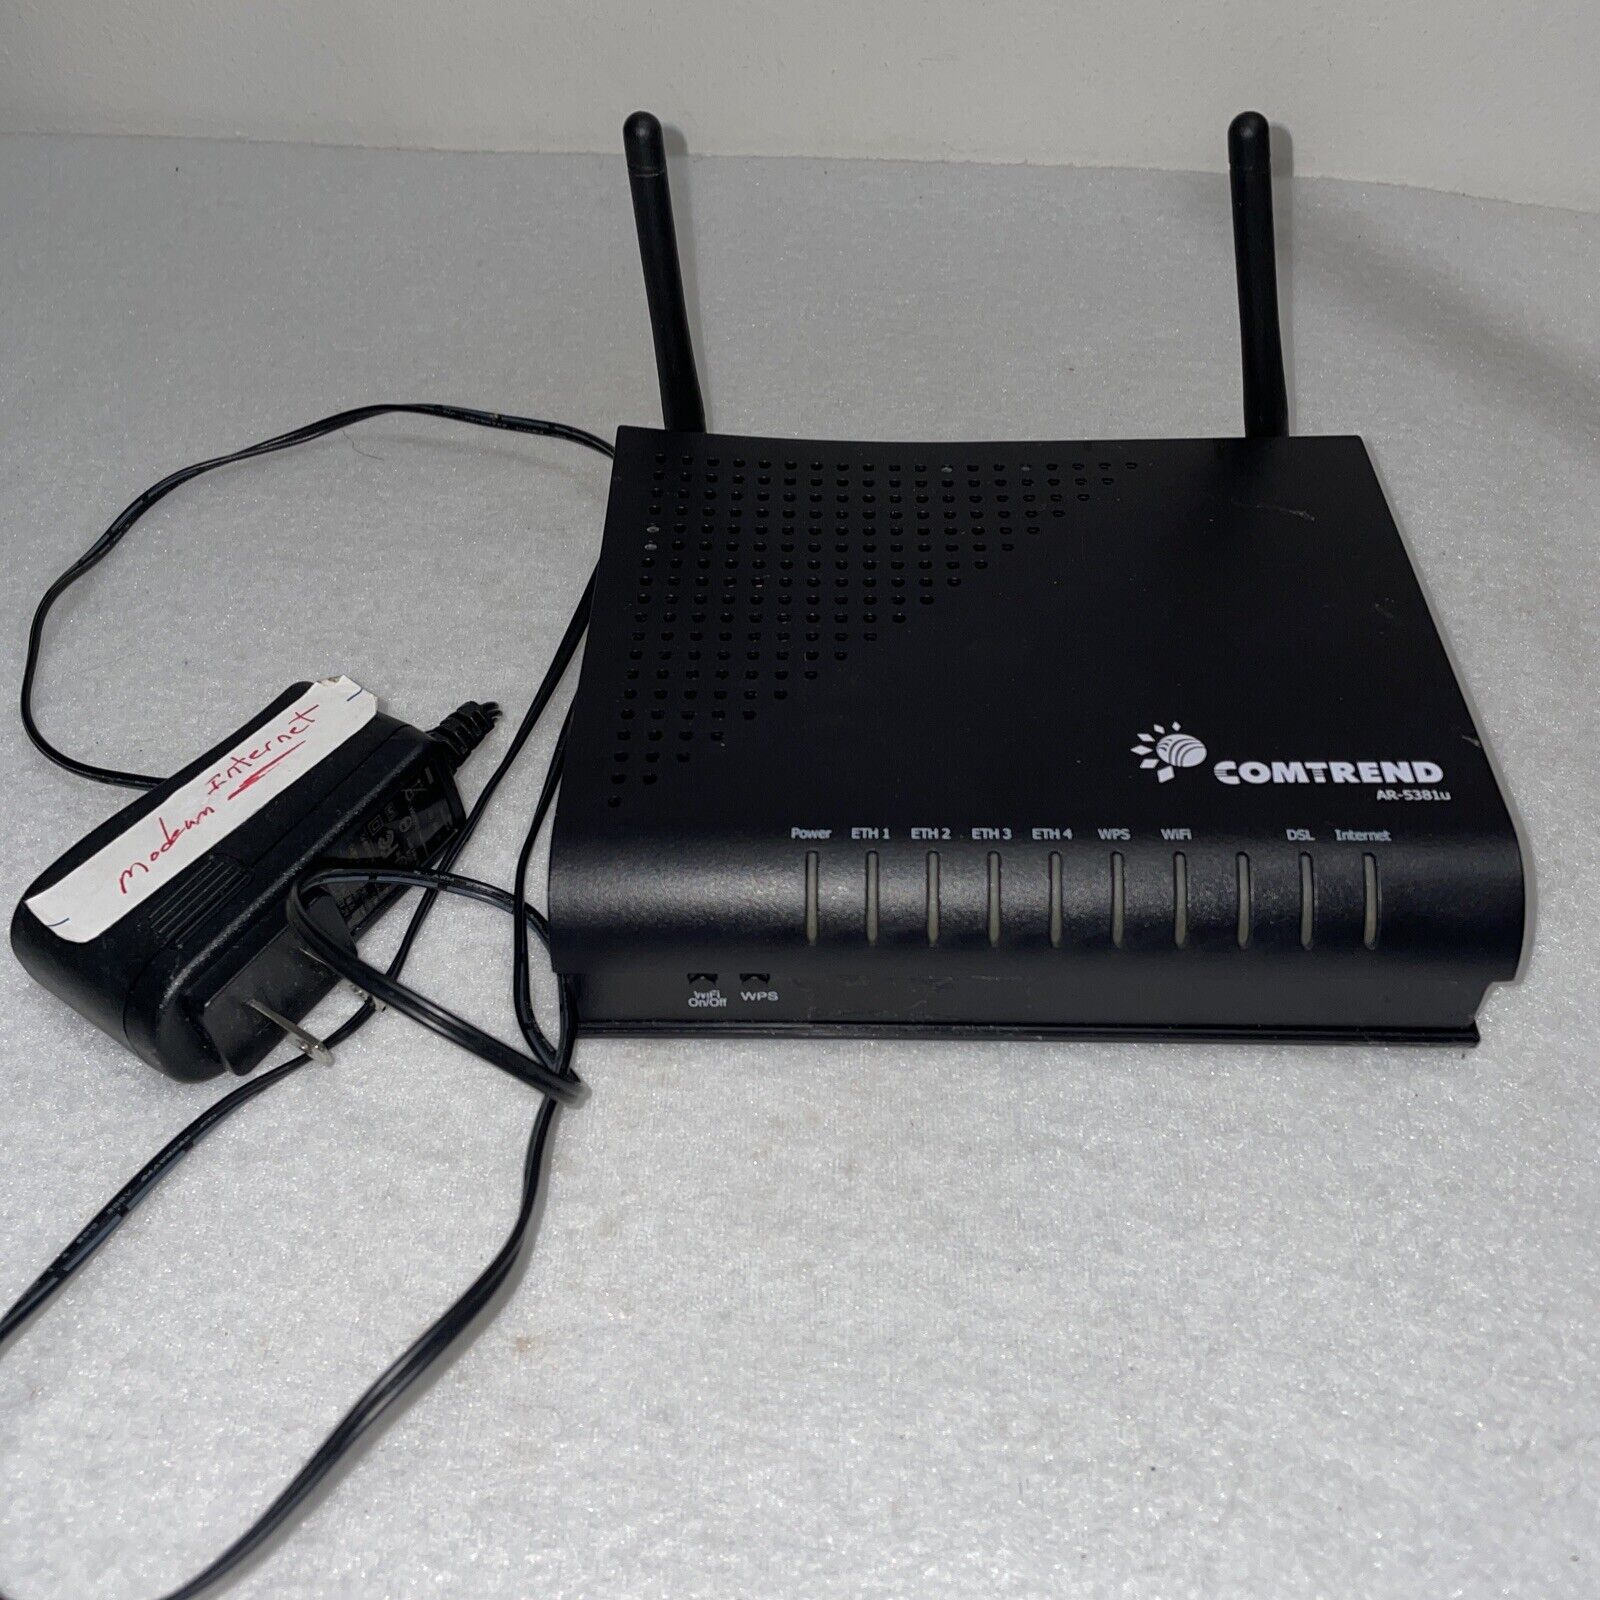 Comtrend Model AR-5381U Black Wireless DSL Internet PC Laptop Computer Router  